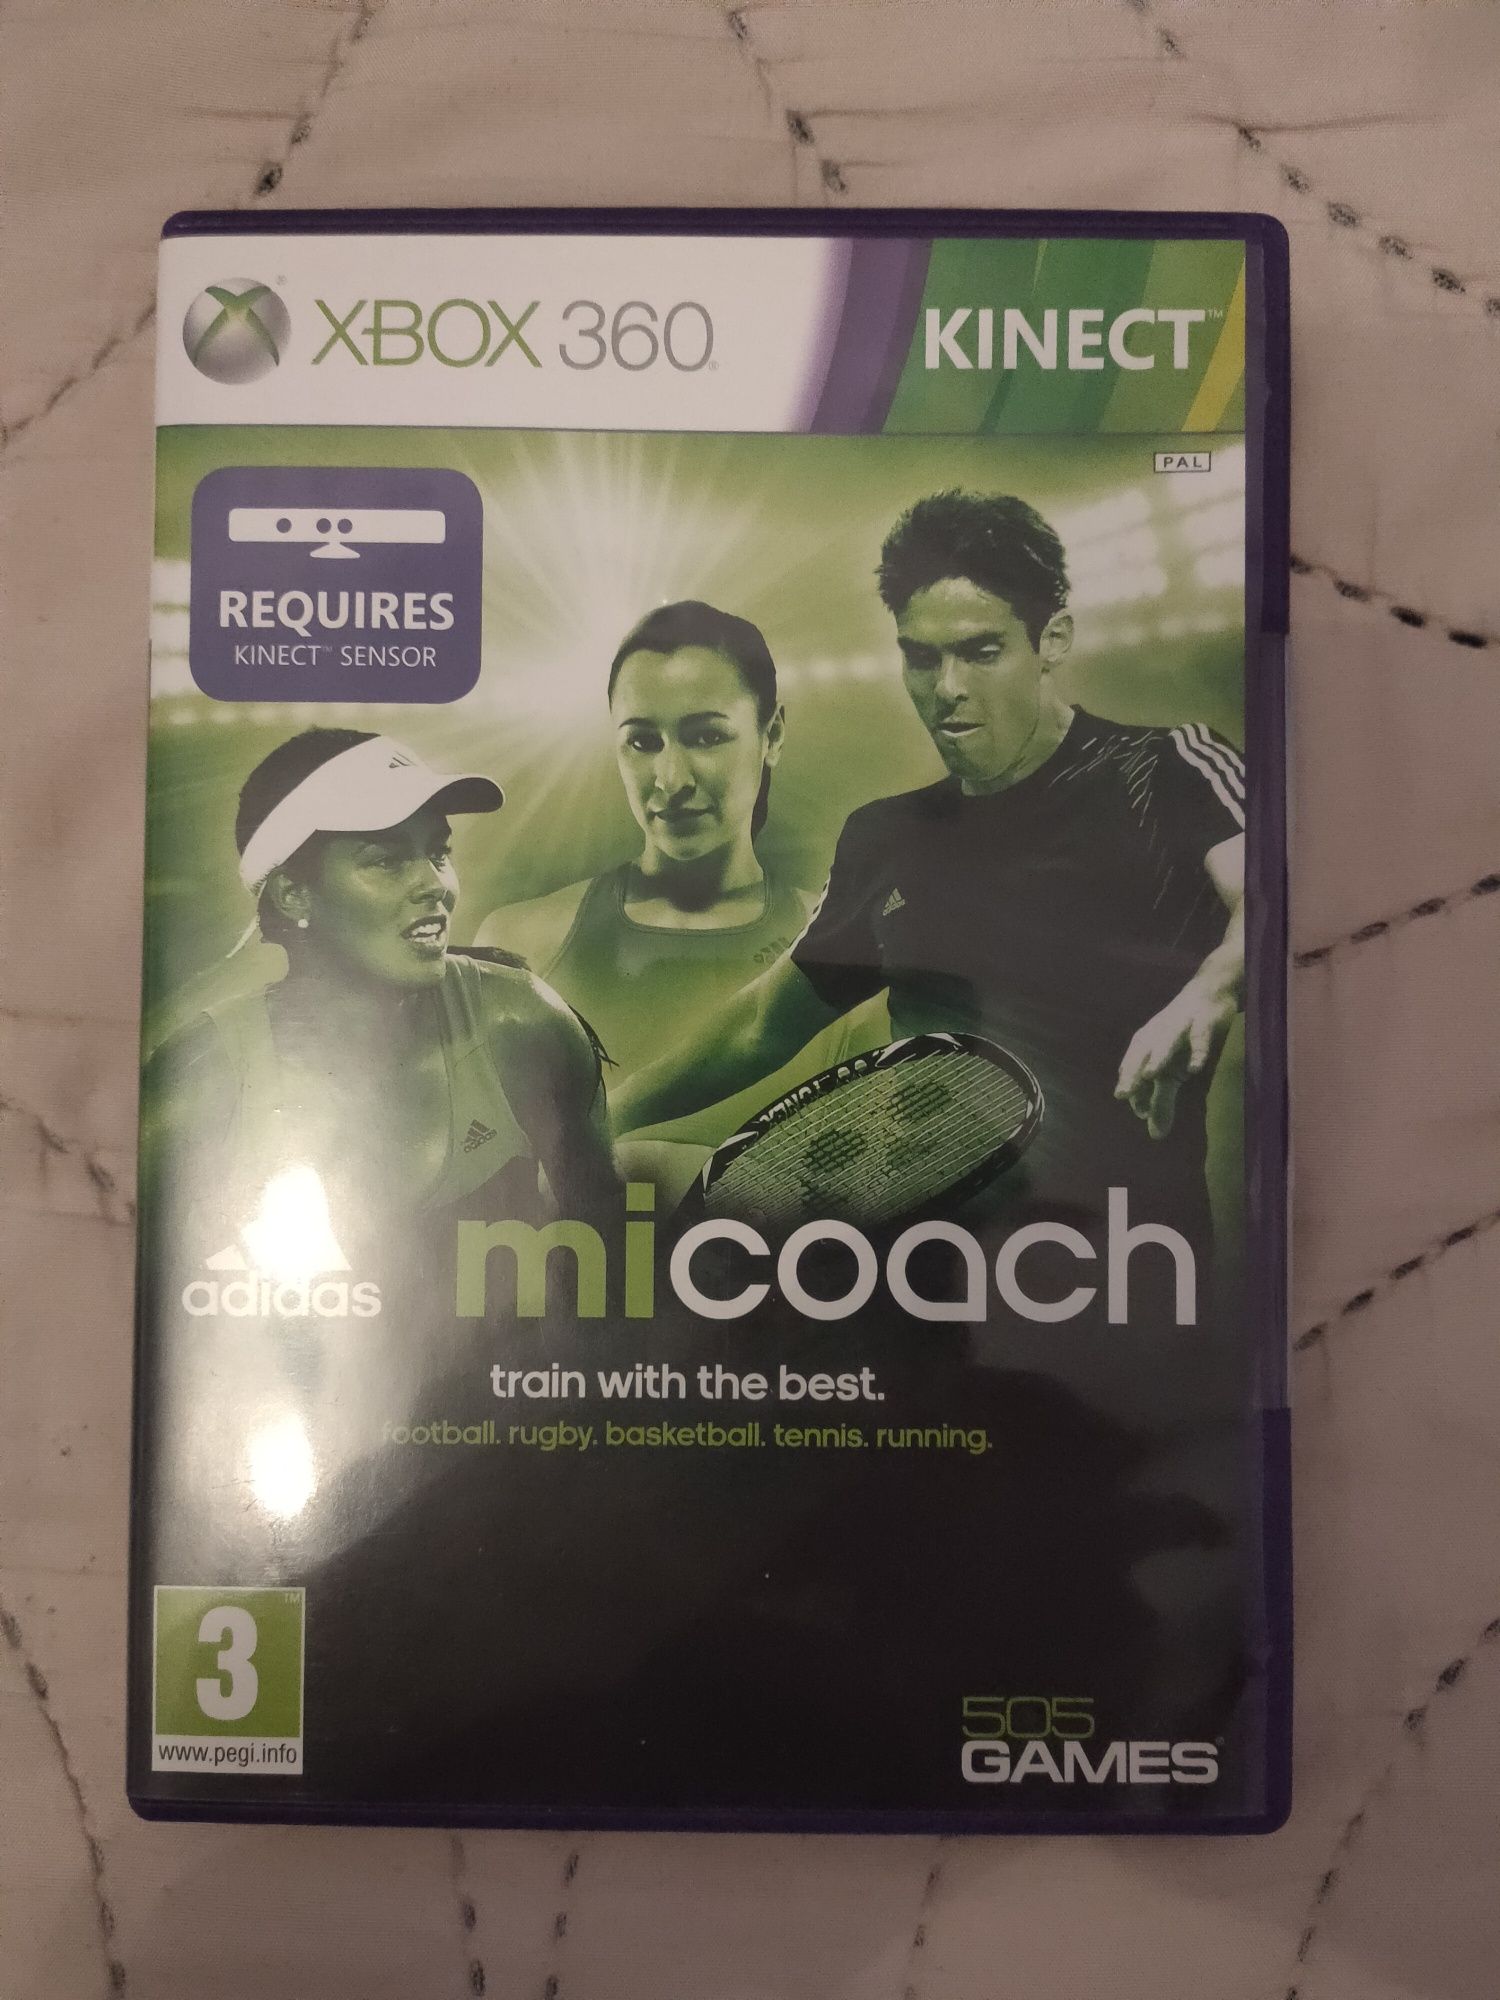 Micoach adidas Kinect Xbox 360